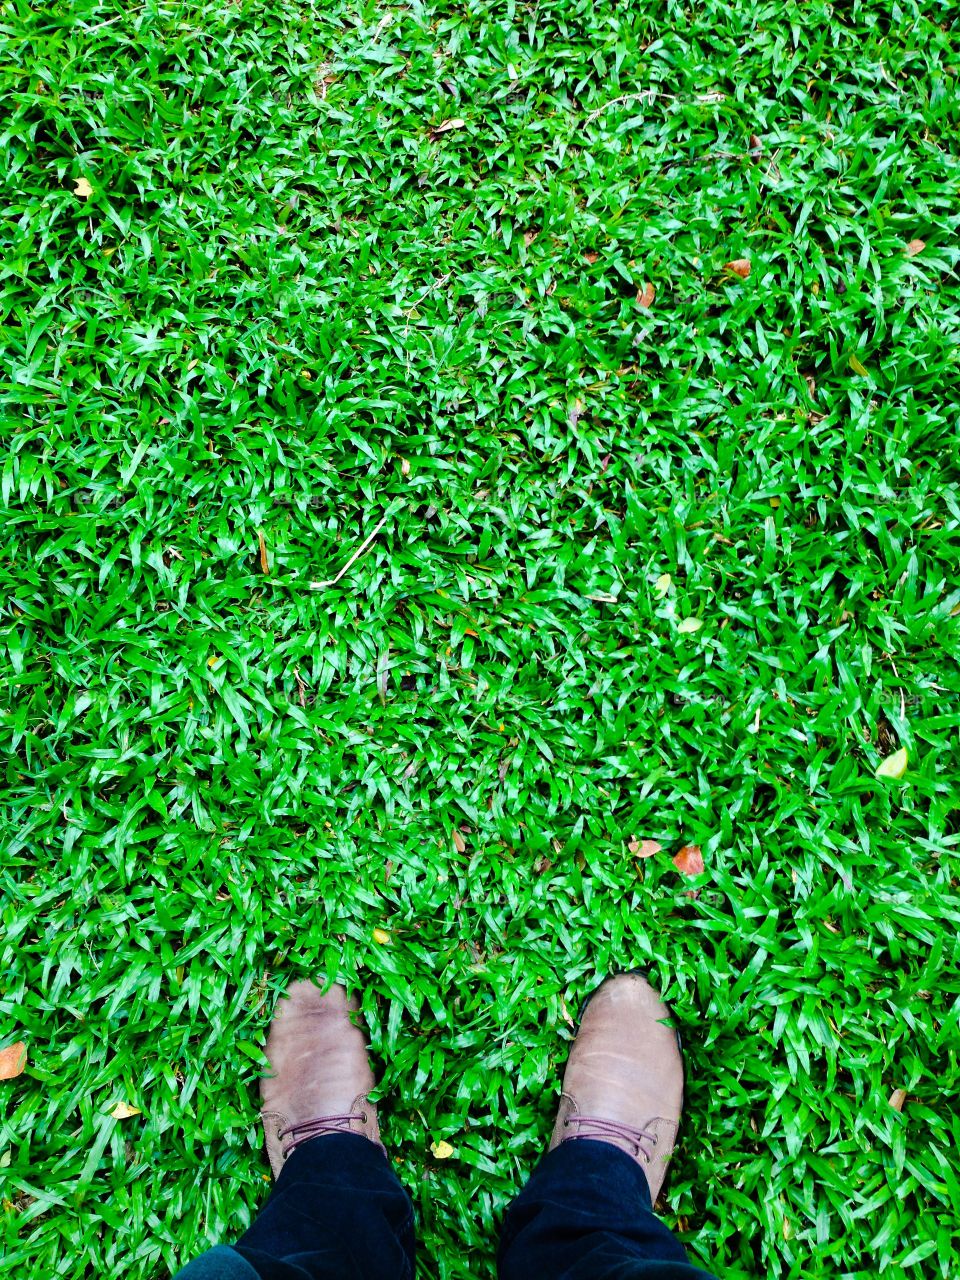 Green carpet. Stepping on the grass field